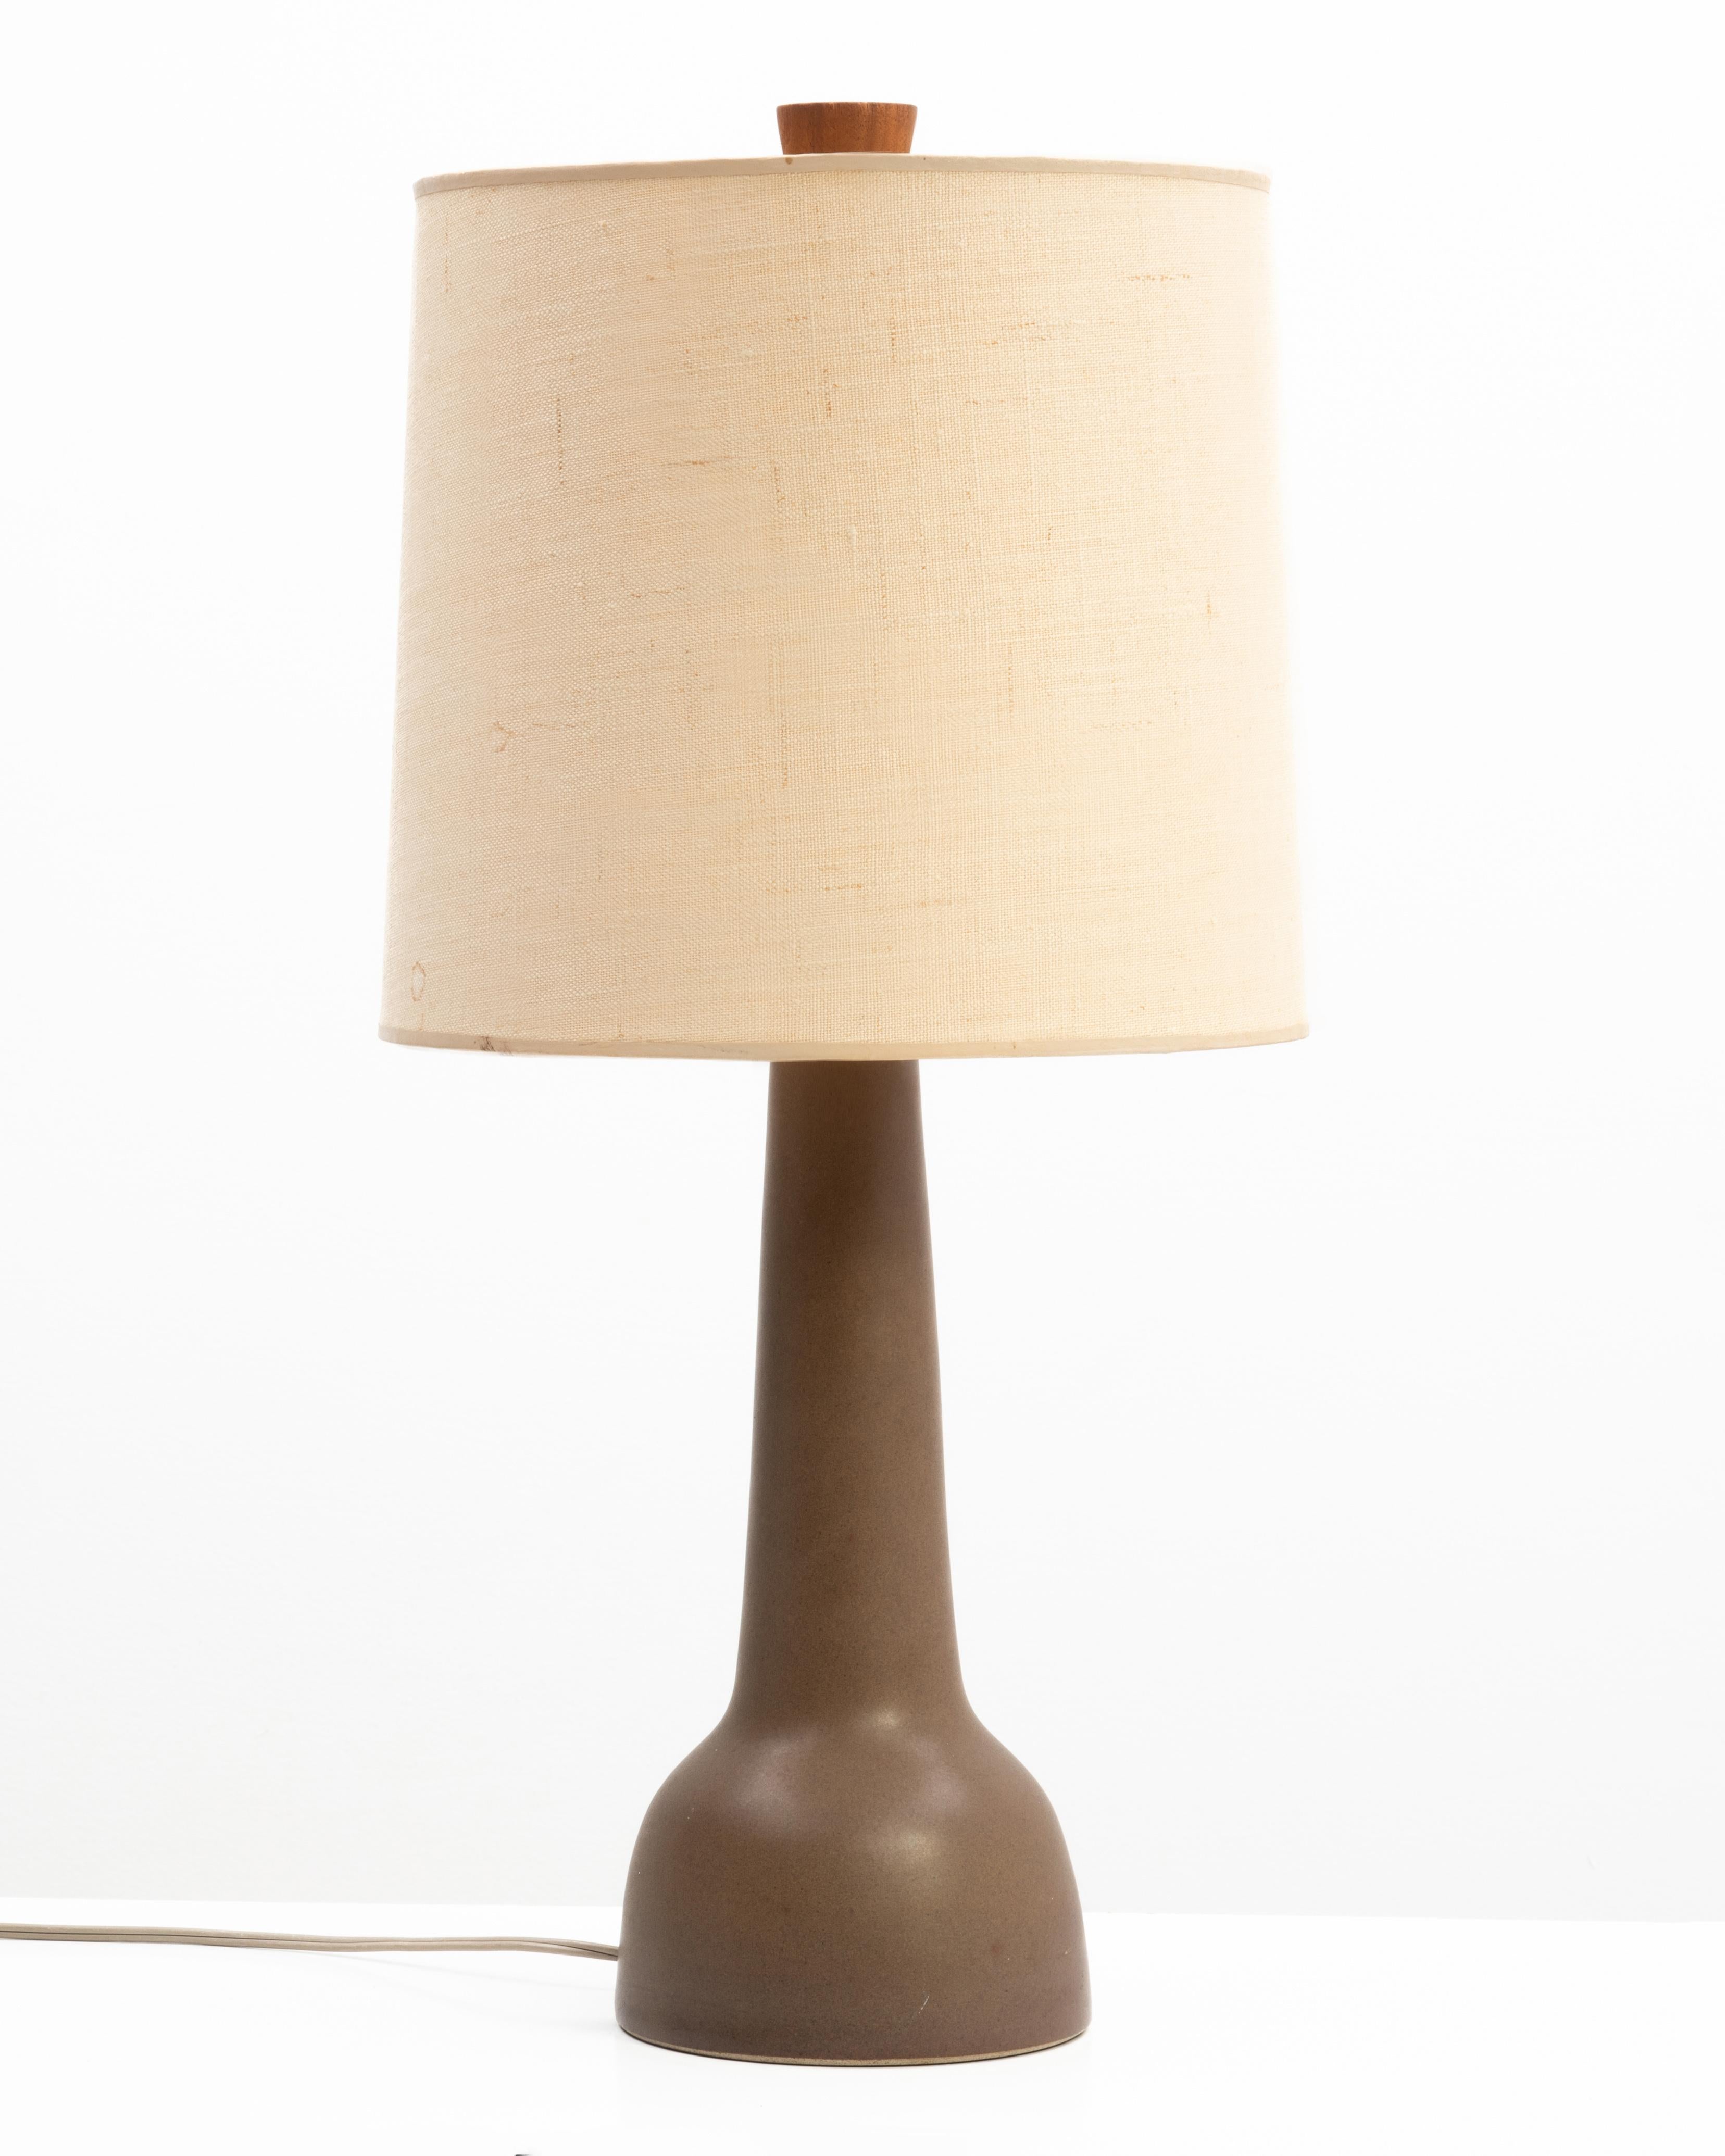 Mid-20th Century Gordon Jane Martz Marshall Studios Table Lamp Brown Speckled Original Finial For Sale